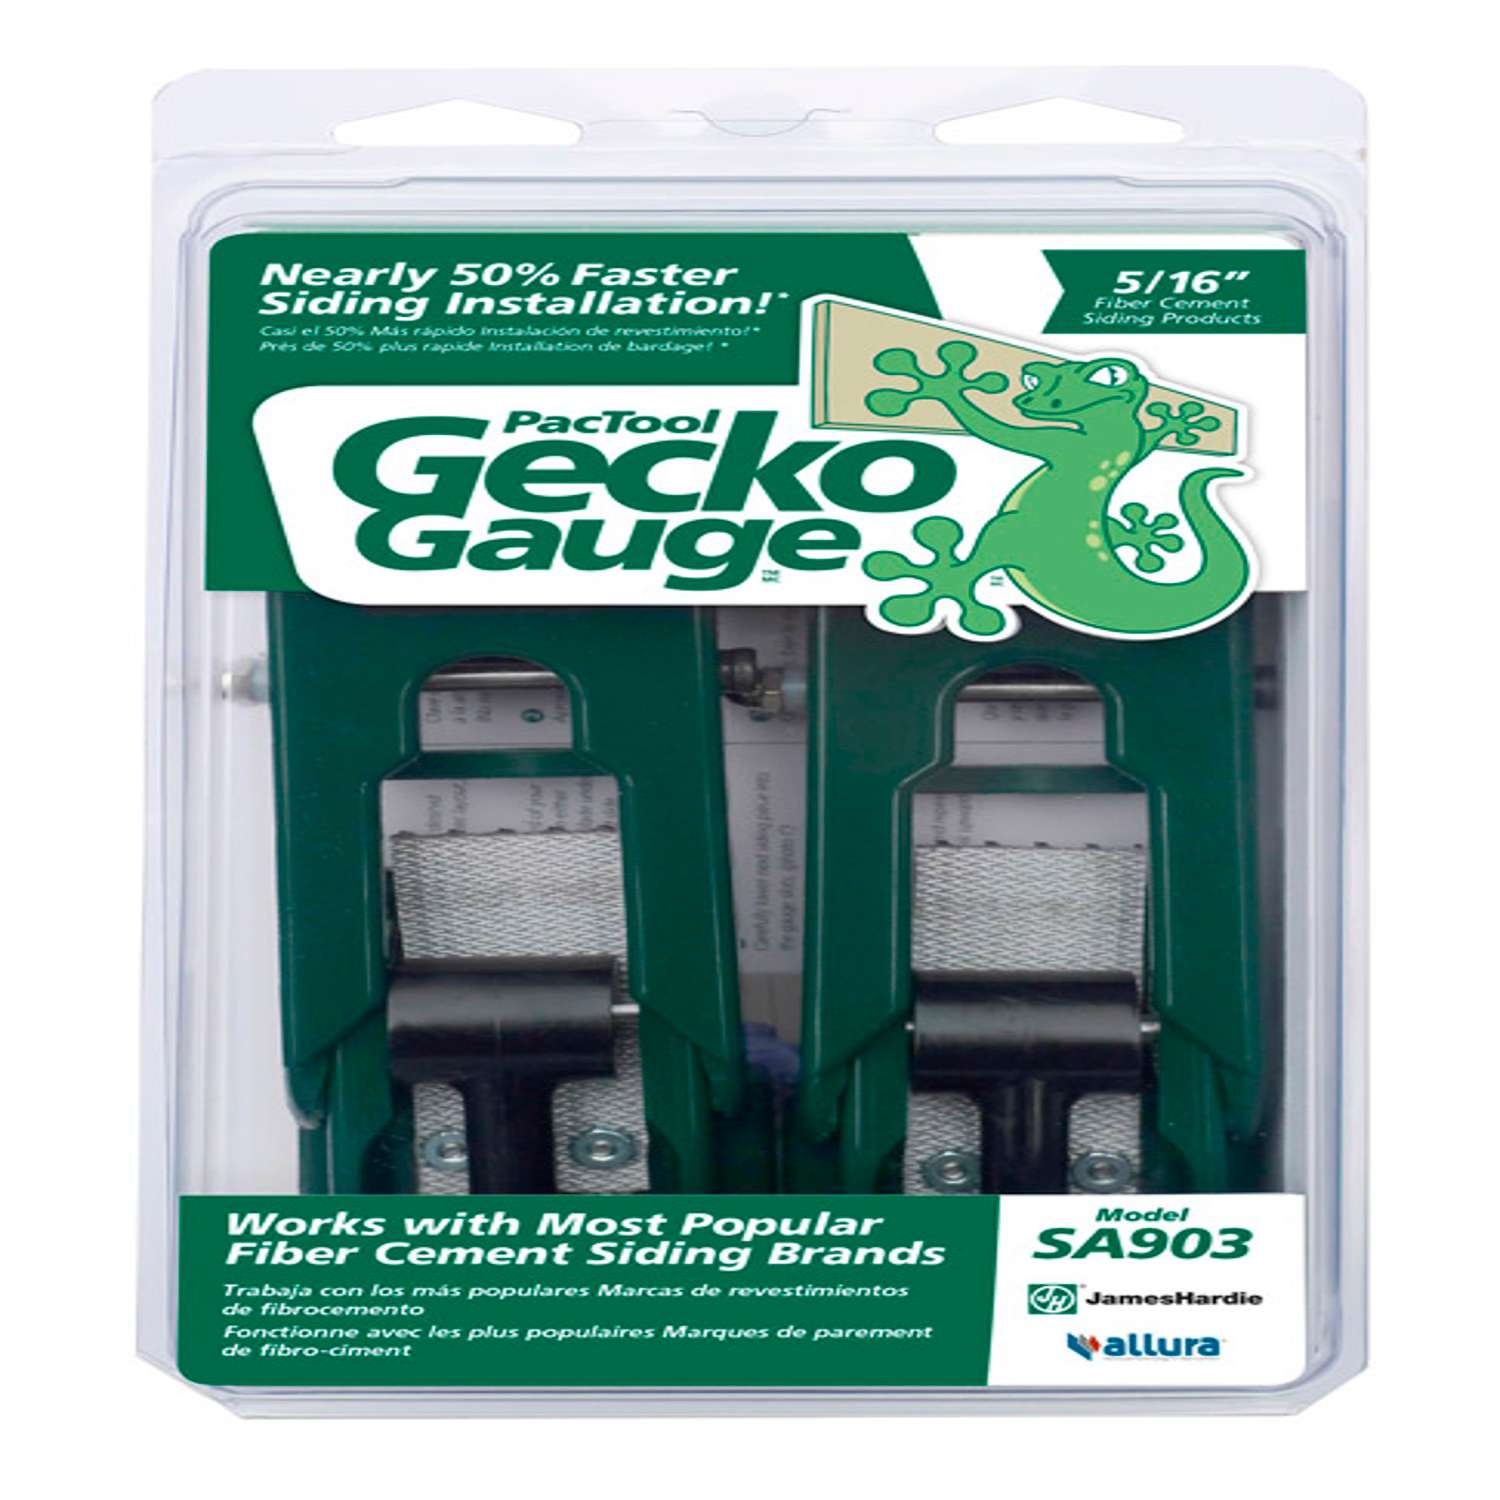 PacTool SA902A.01 Gecko Gauge 2-Piece Aluminum Fiber Cement Siding Gauges